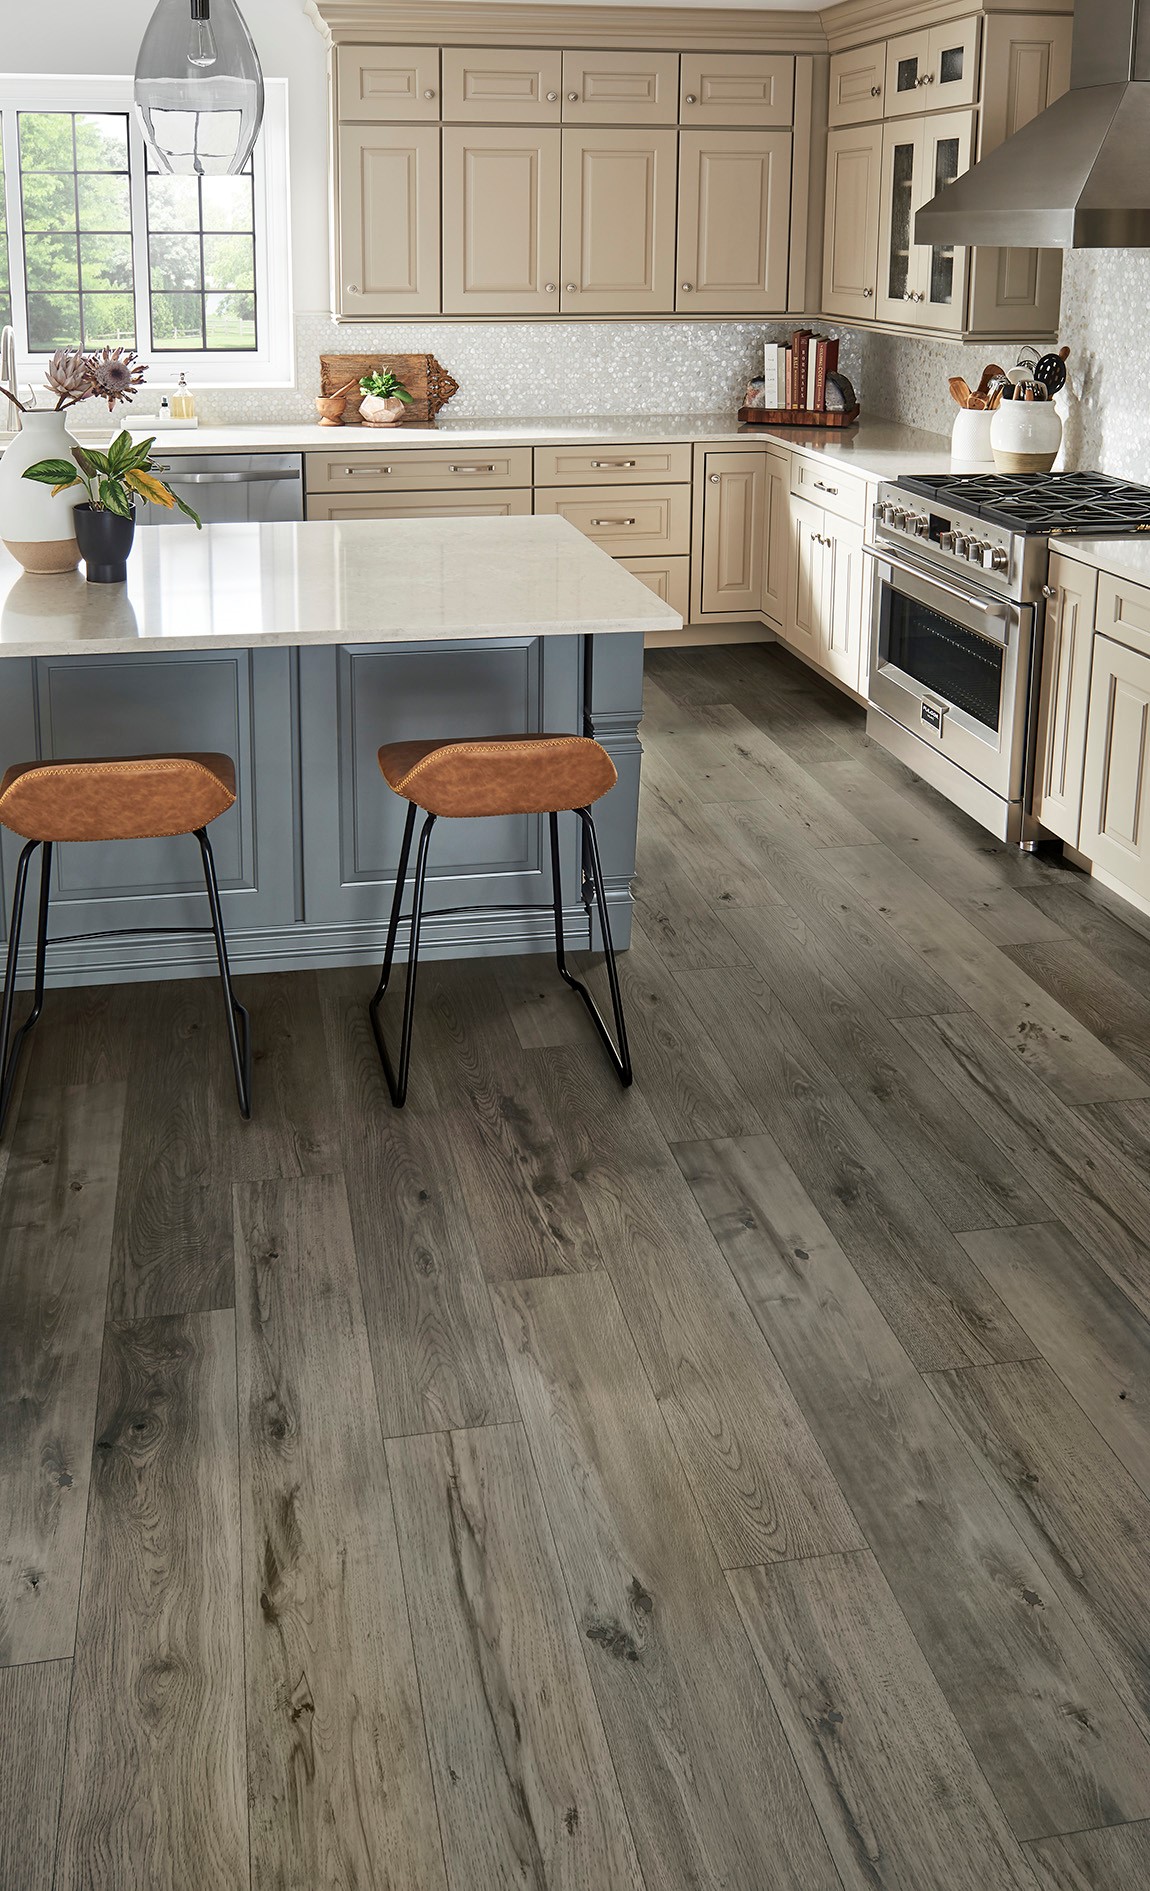 The Recipe For Great Kitchen Flooring, Dark Hardwood Floors Kitchen Pictures